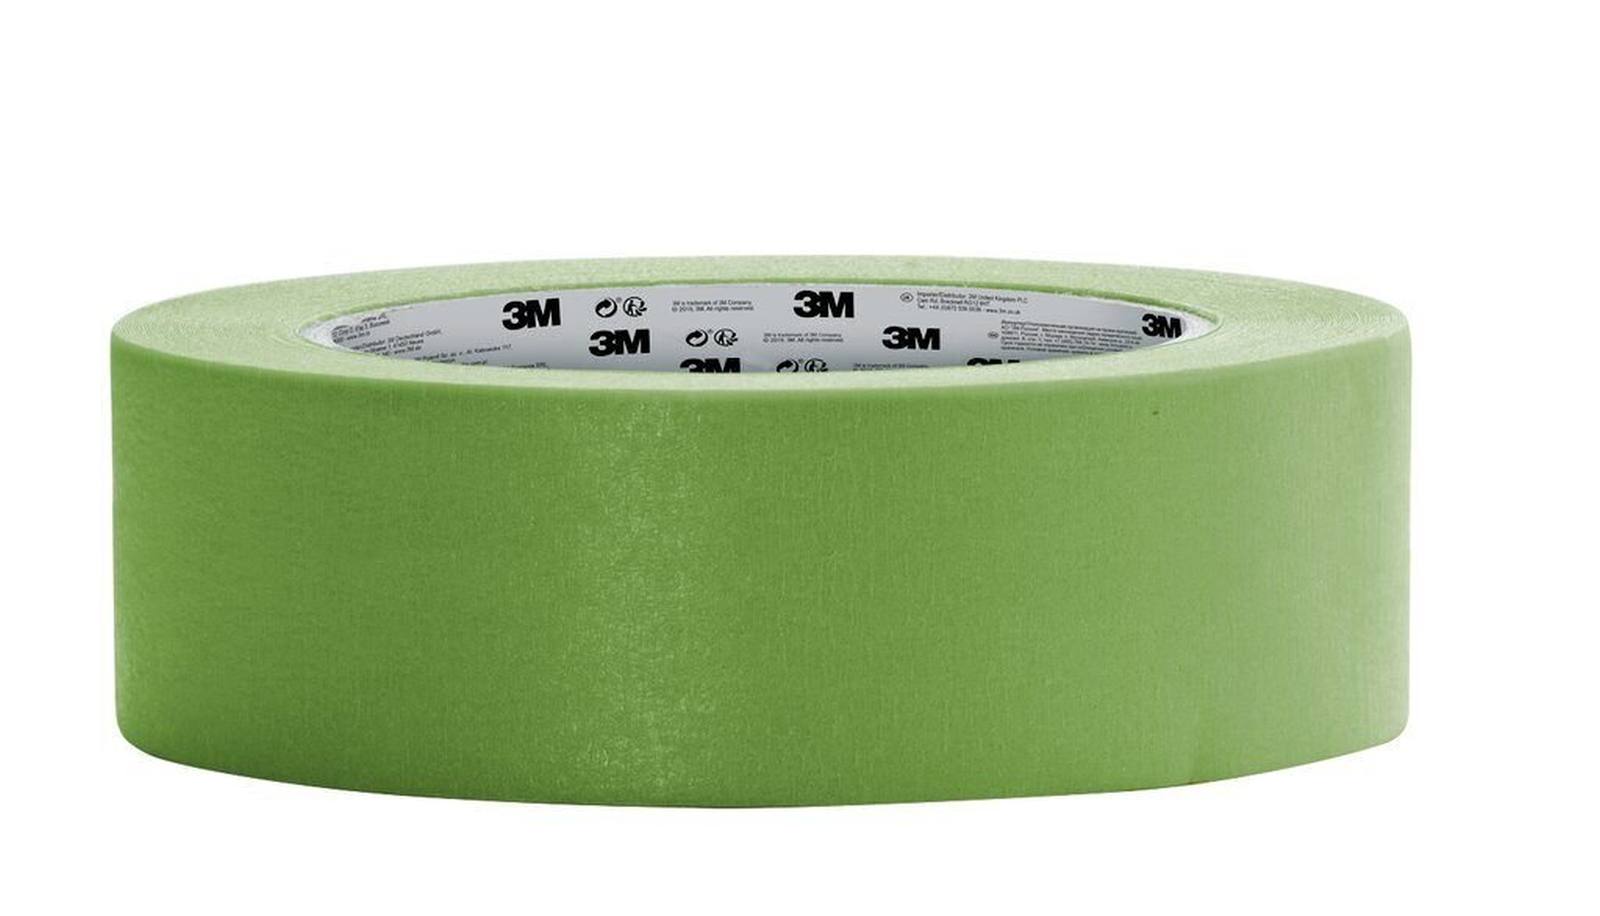 3M Crepe tape 2060, green, 36 mm x 50m, 0.150 mm